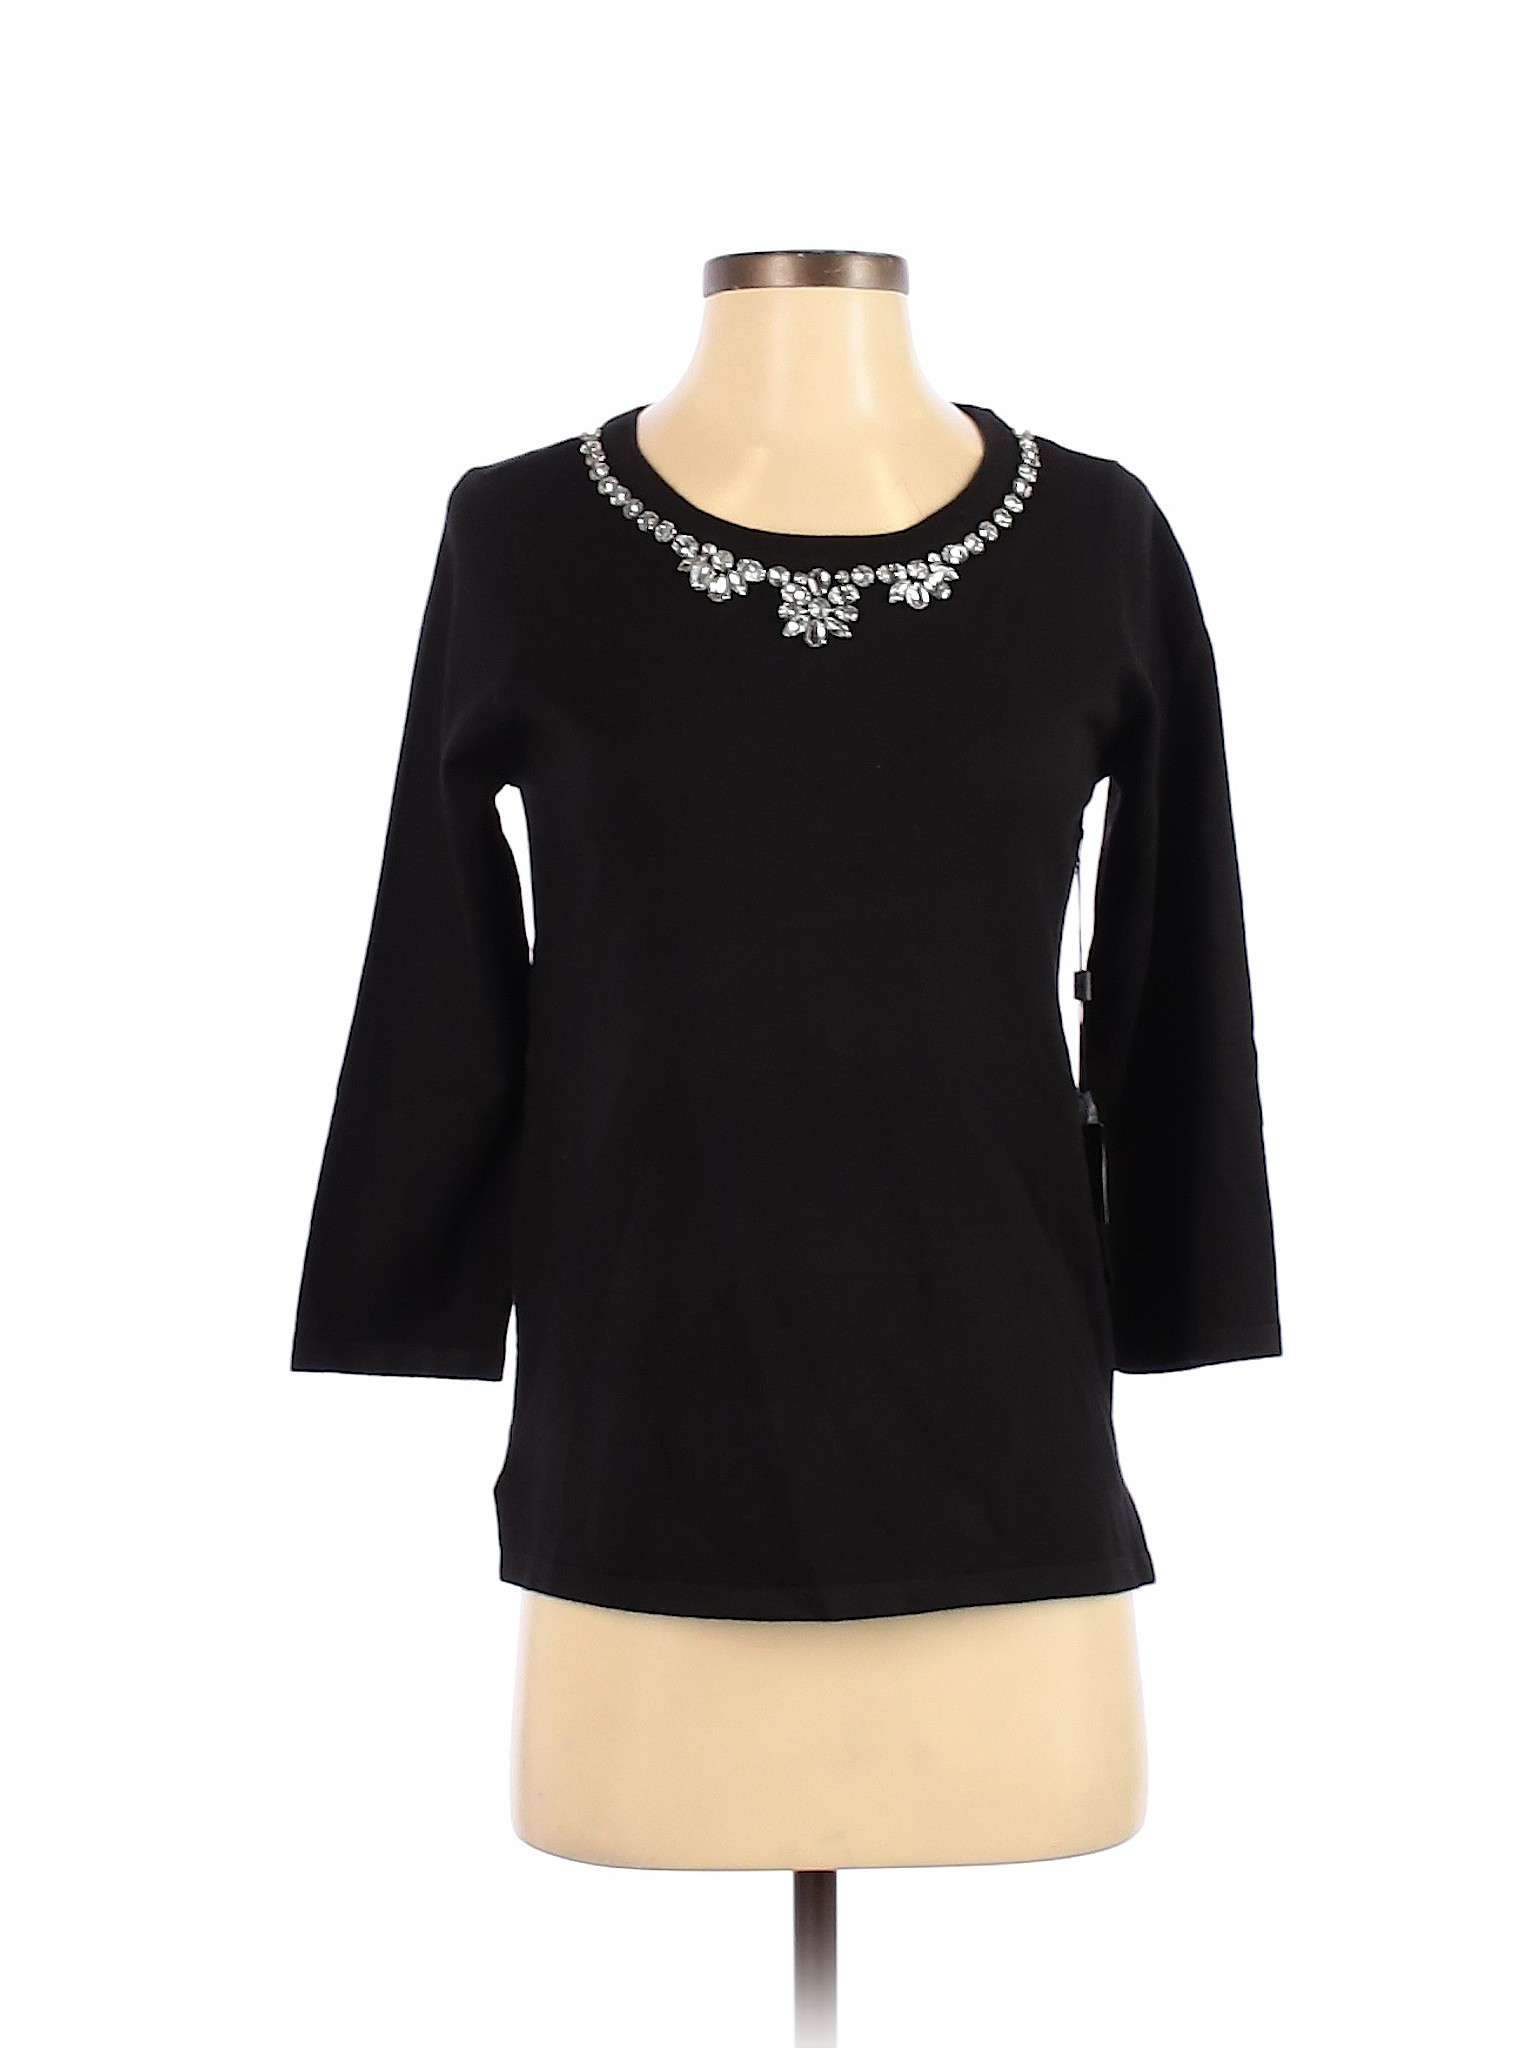 NWT Cyrus Women Black Pullover Sweater S | eBay